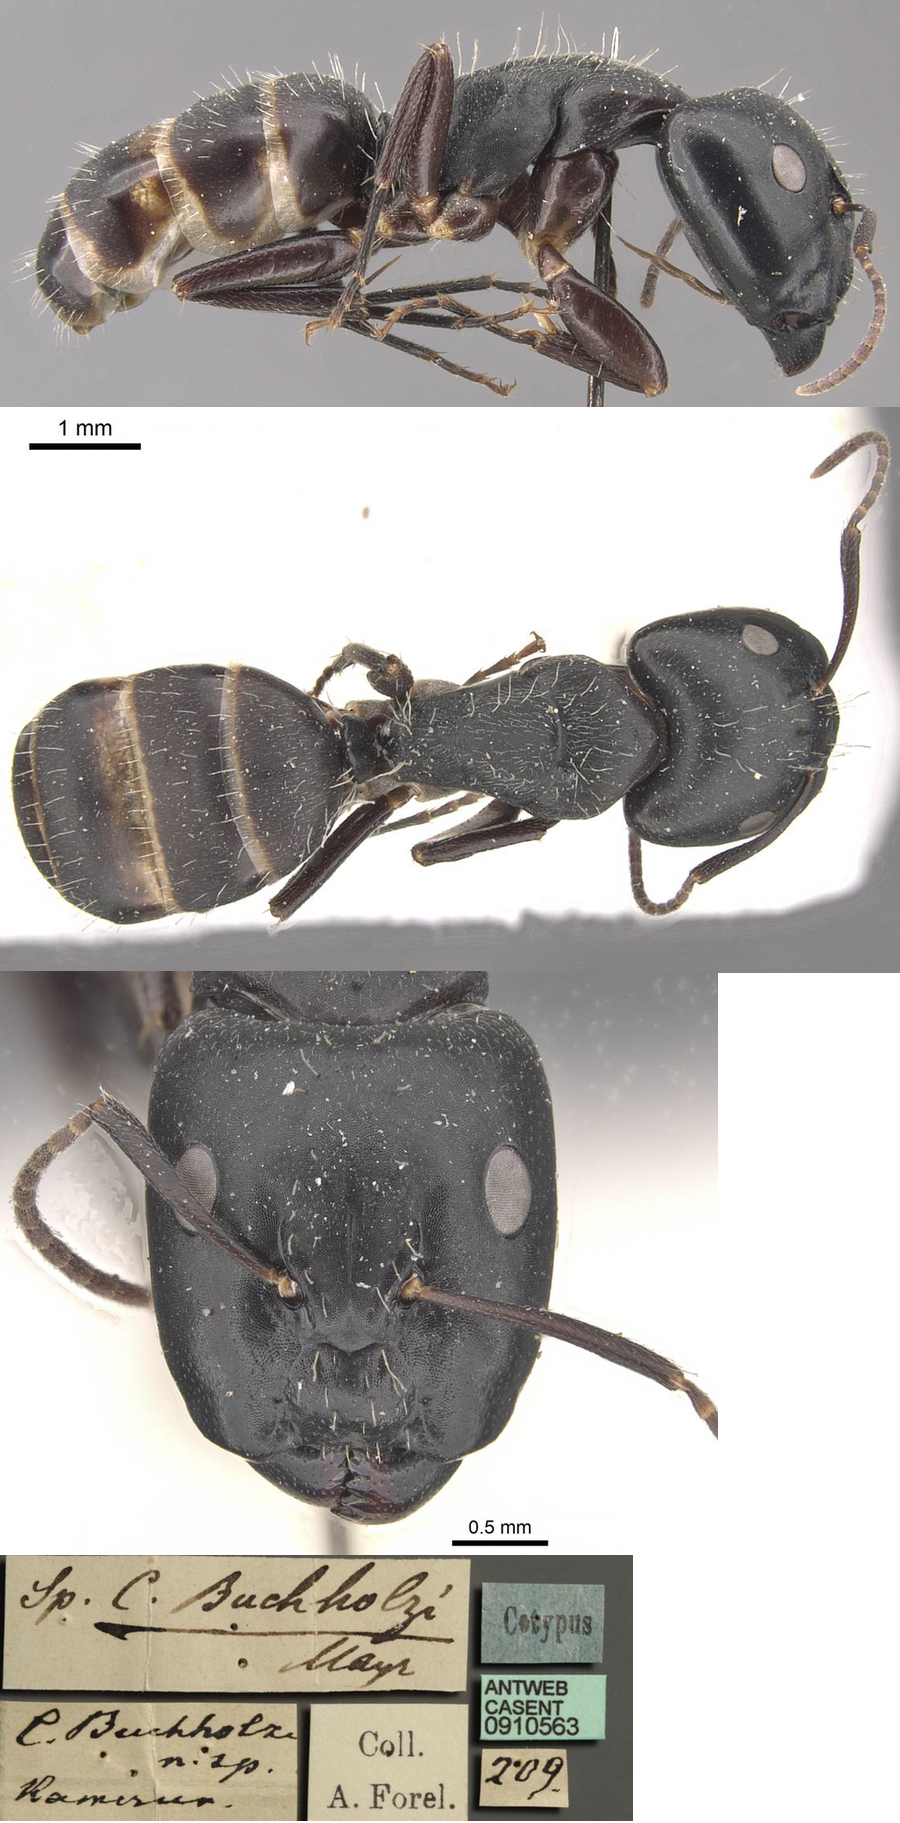 Camponotus buchholzi major